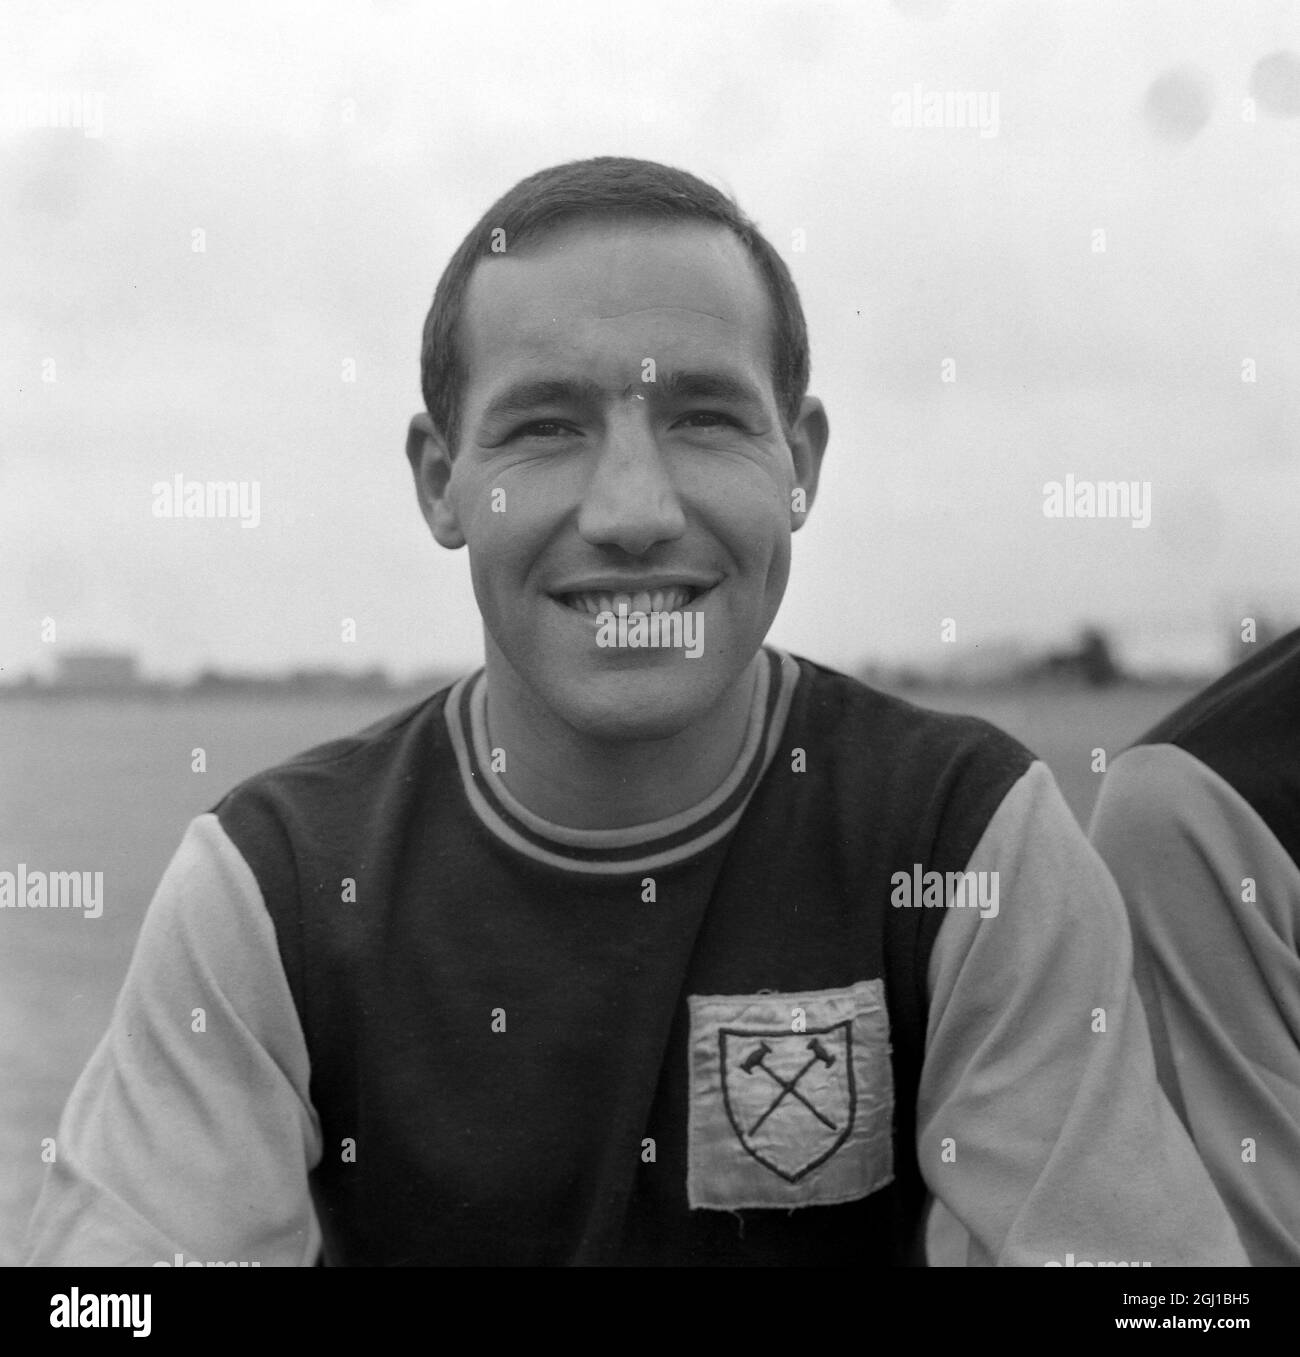 EDDIE BOVINGTON - PORTRAIT OF FOOTBALLER OF WEST HAM UNITED FC FOOTBALL CLUB TEAM IN LONDON ; 19 AUGUST 1964 Stock Photo